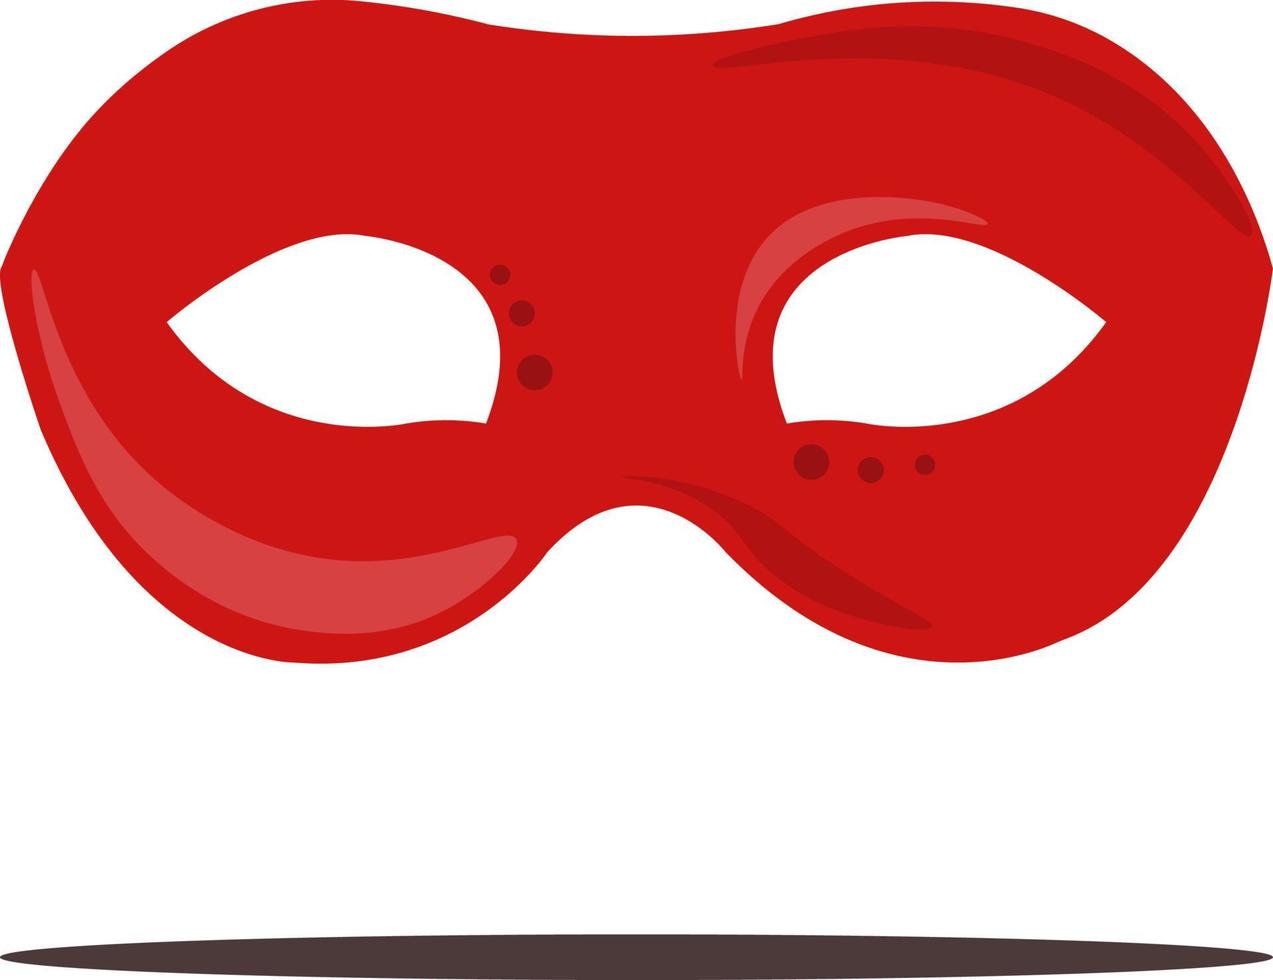 Red mask, illustration, vector on white background.